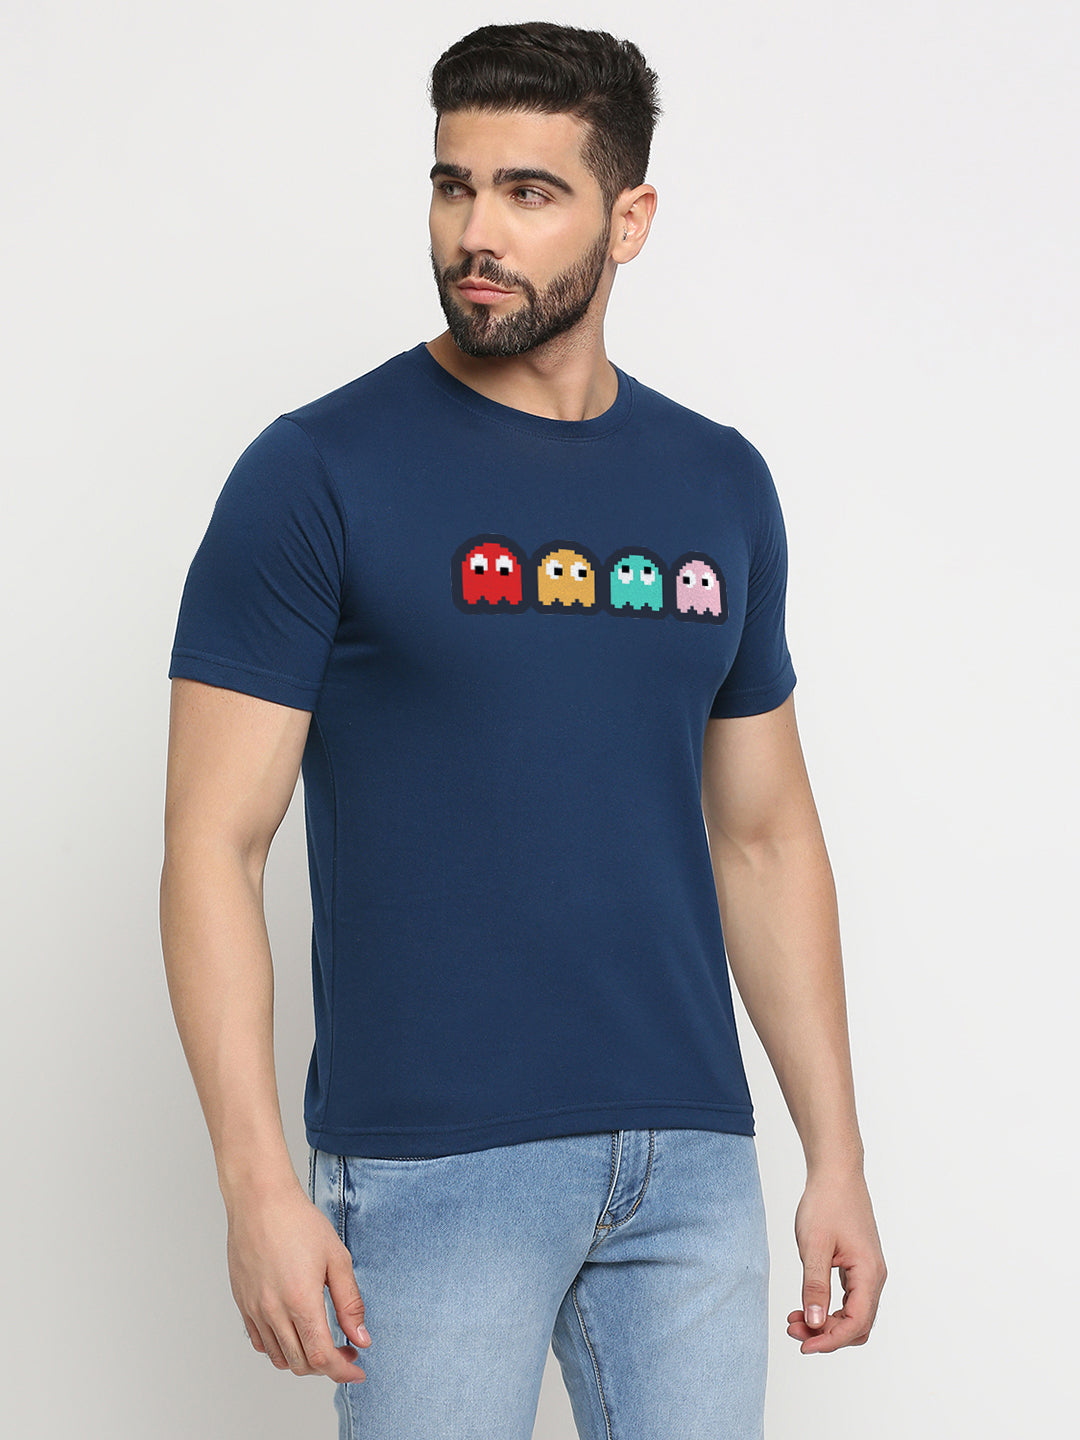 Pacman Ghosts T-Shirt